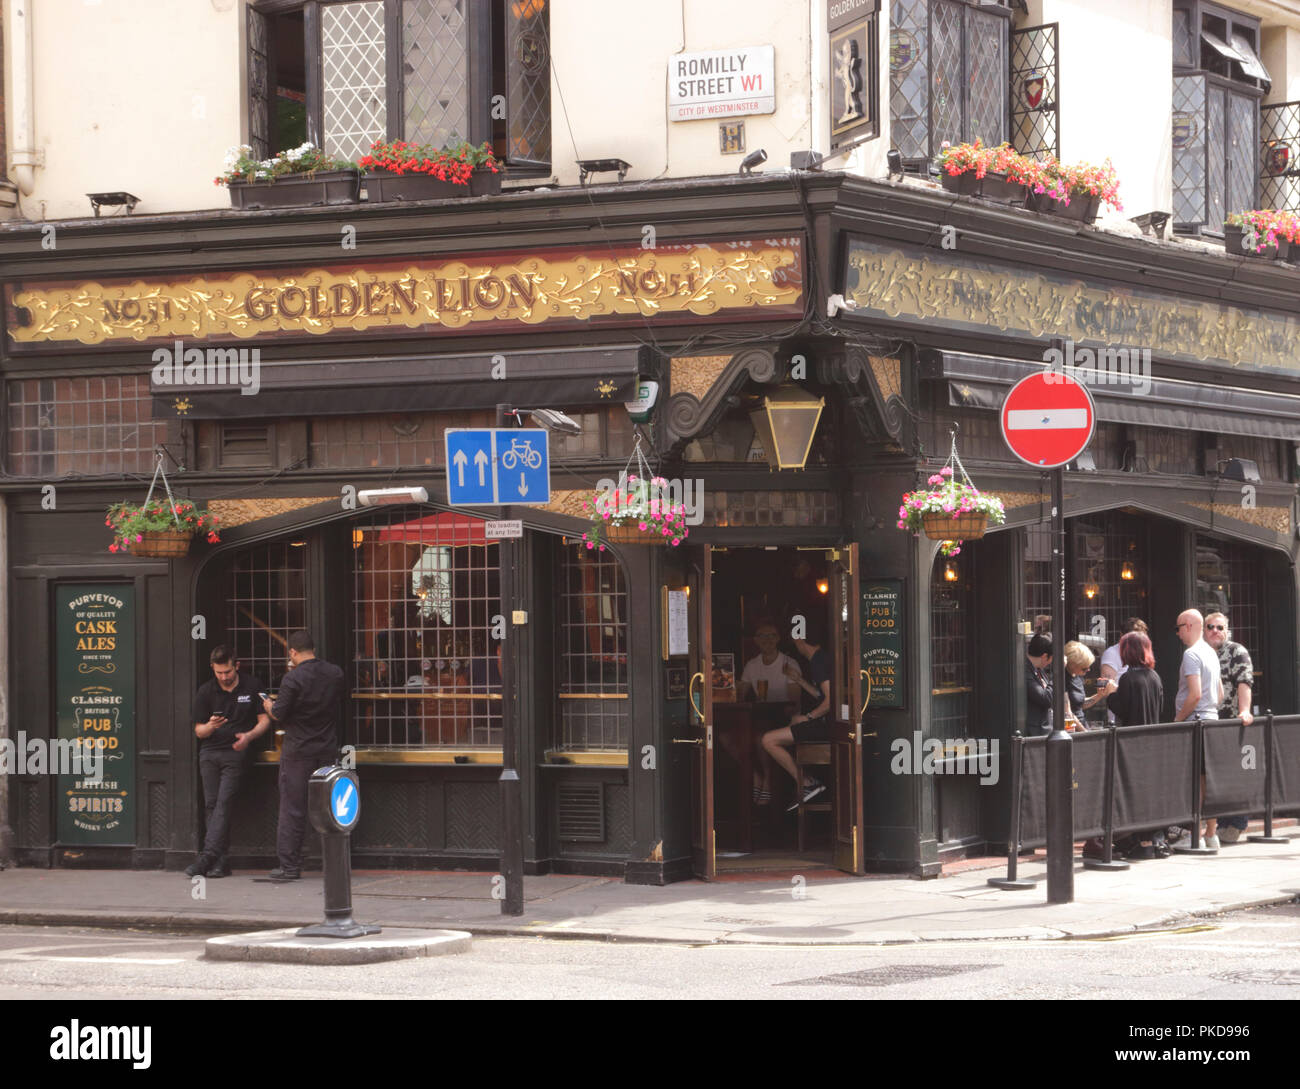 Golden Lion Pub Romilly Street Soho London Stock Photo